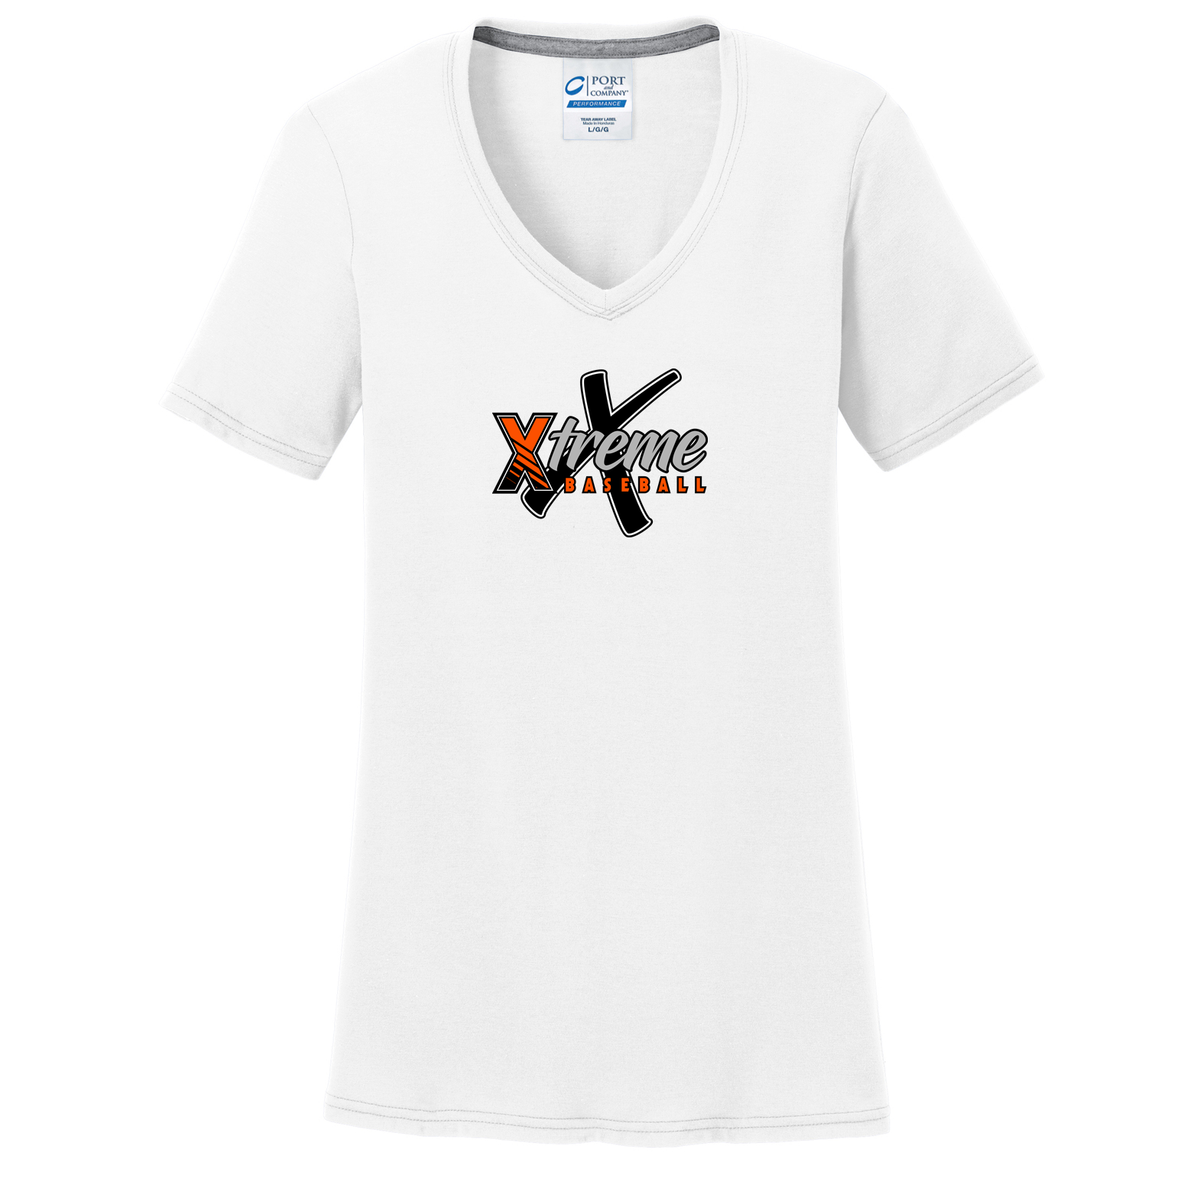 Xtreme Baseball Women's T-Shirt